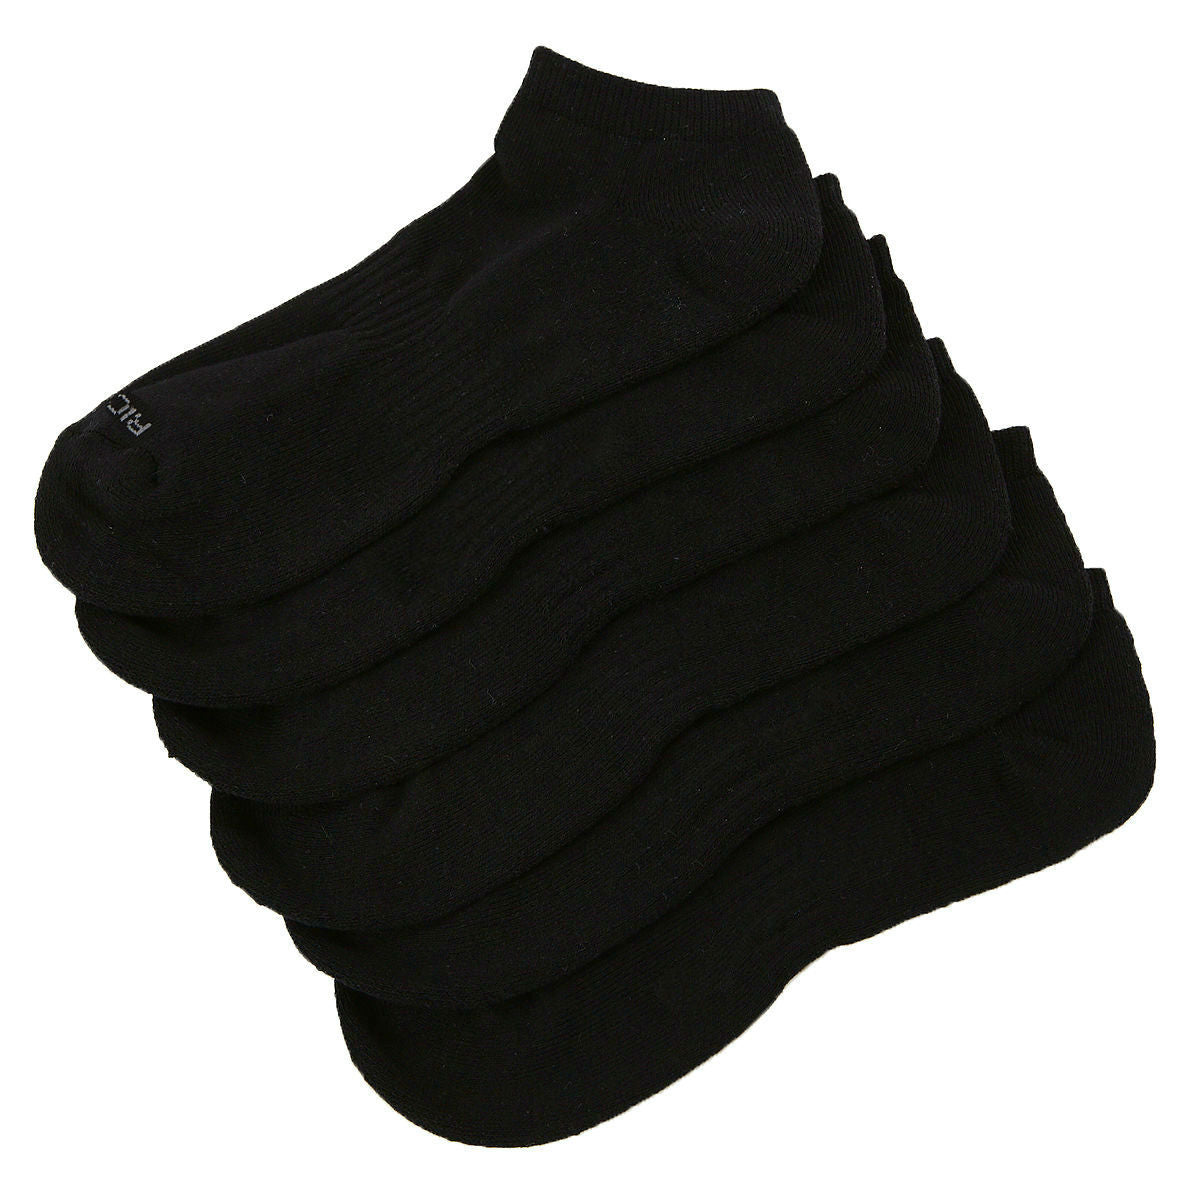 Rich Cotton No-Show Socks- DRI-FIT Cushioned Socks (3 Pack Black)